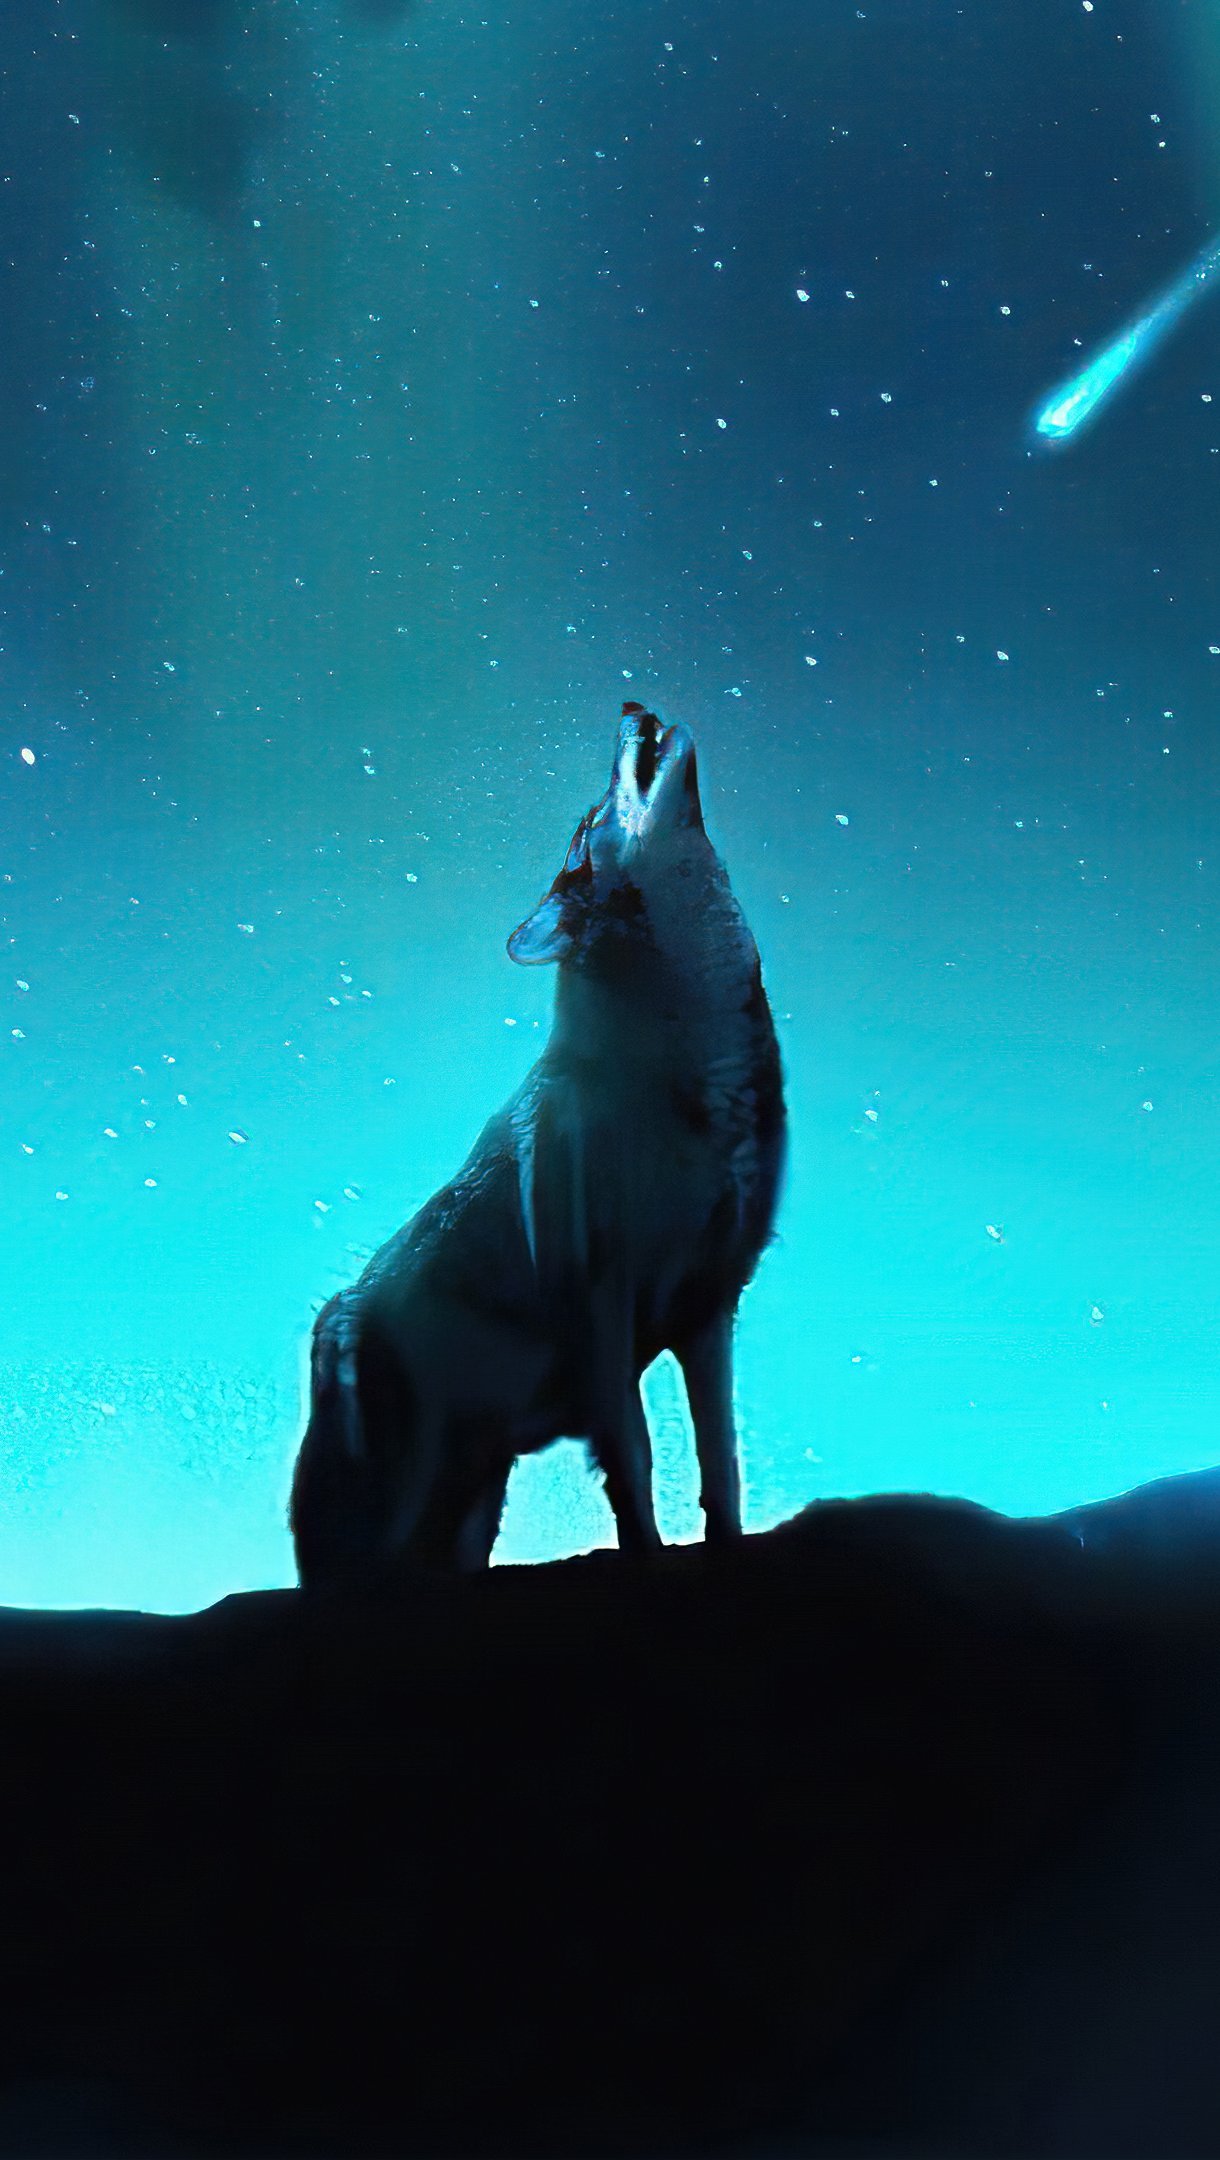 Wolf howling in the stars Wallpaper 4k Ultra HD ID:7852